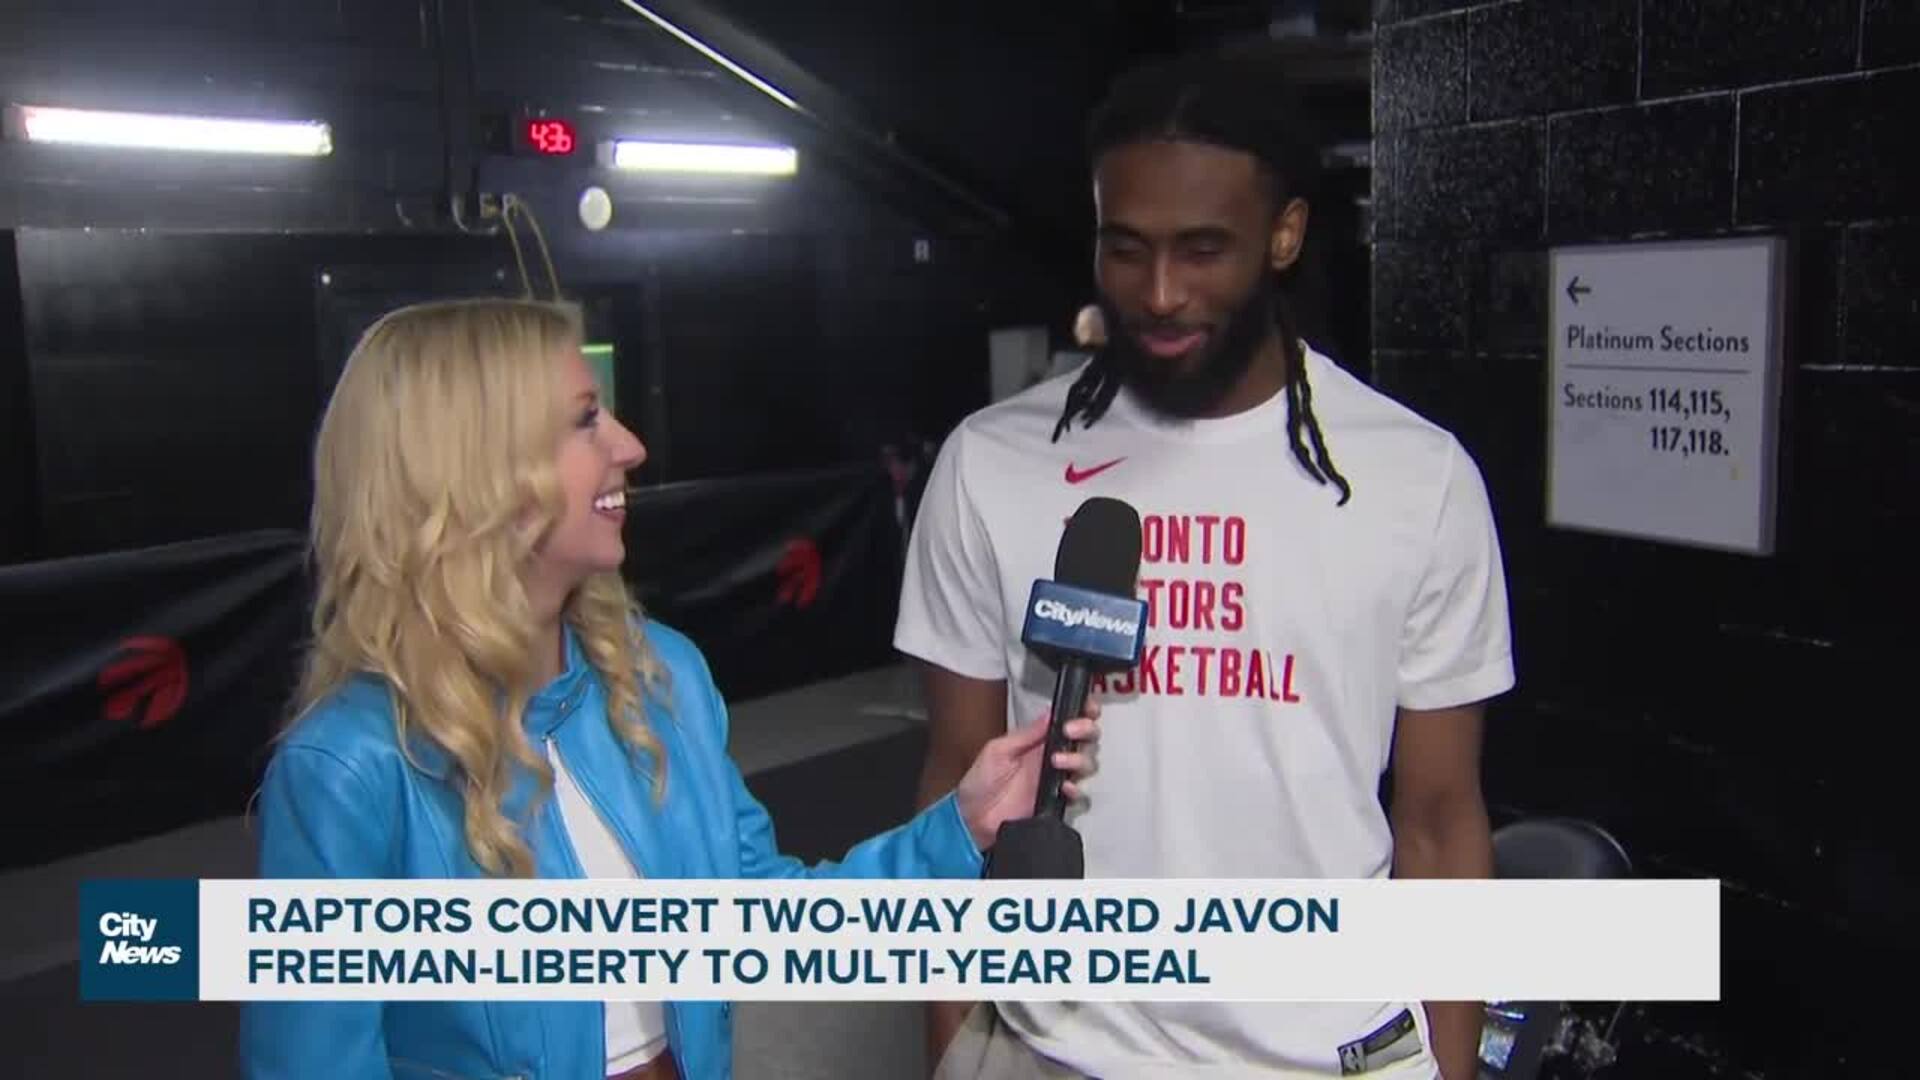 Raptors' Freeman-Liberty reacts to team contract